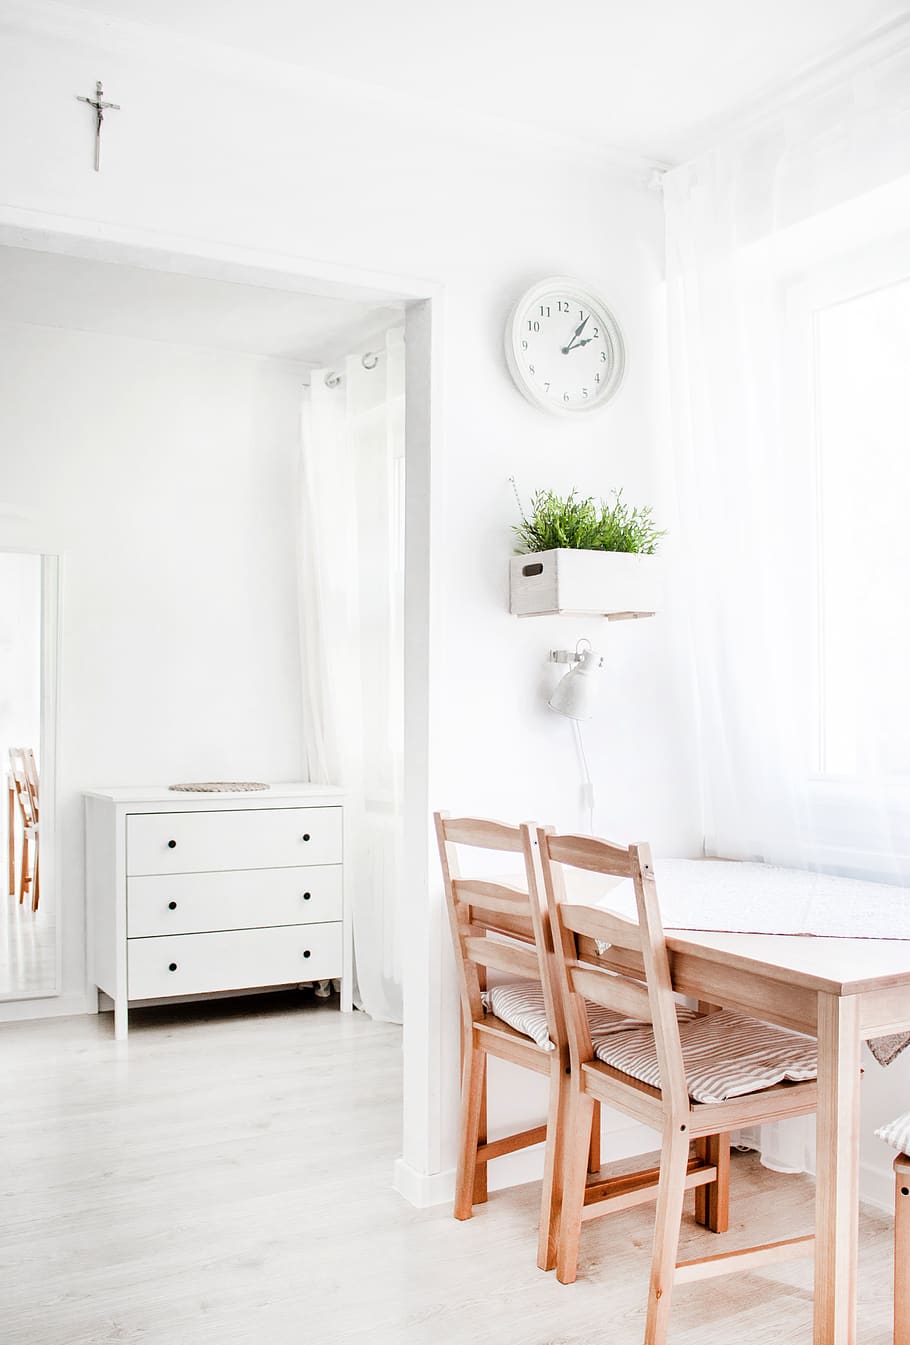 kantor, minimal, putih, kursi, meja, jam, laci, tanaman, jendela, dalam ruangan